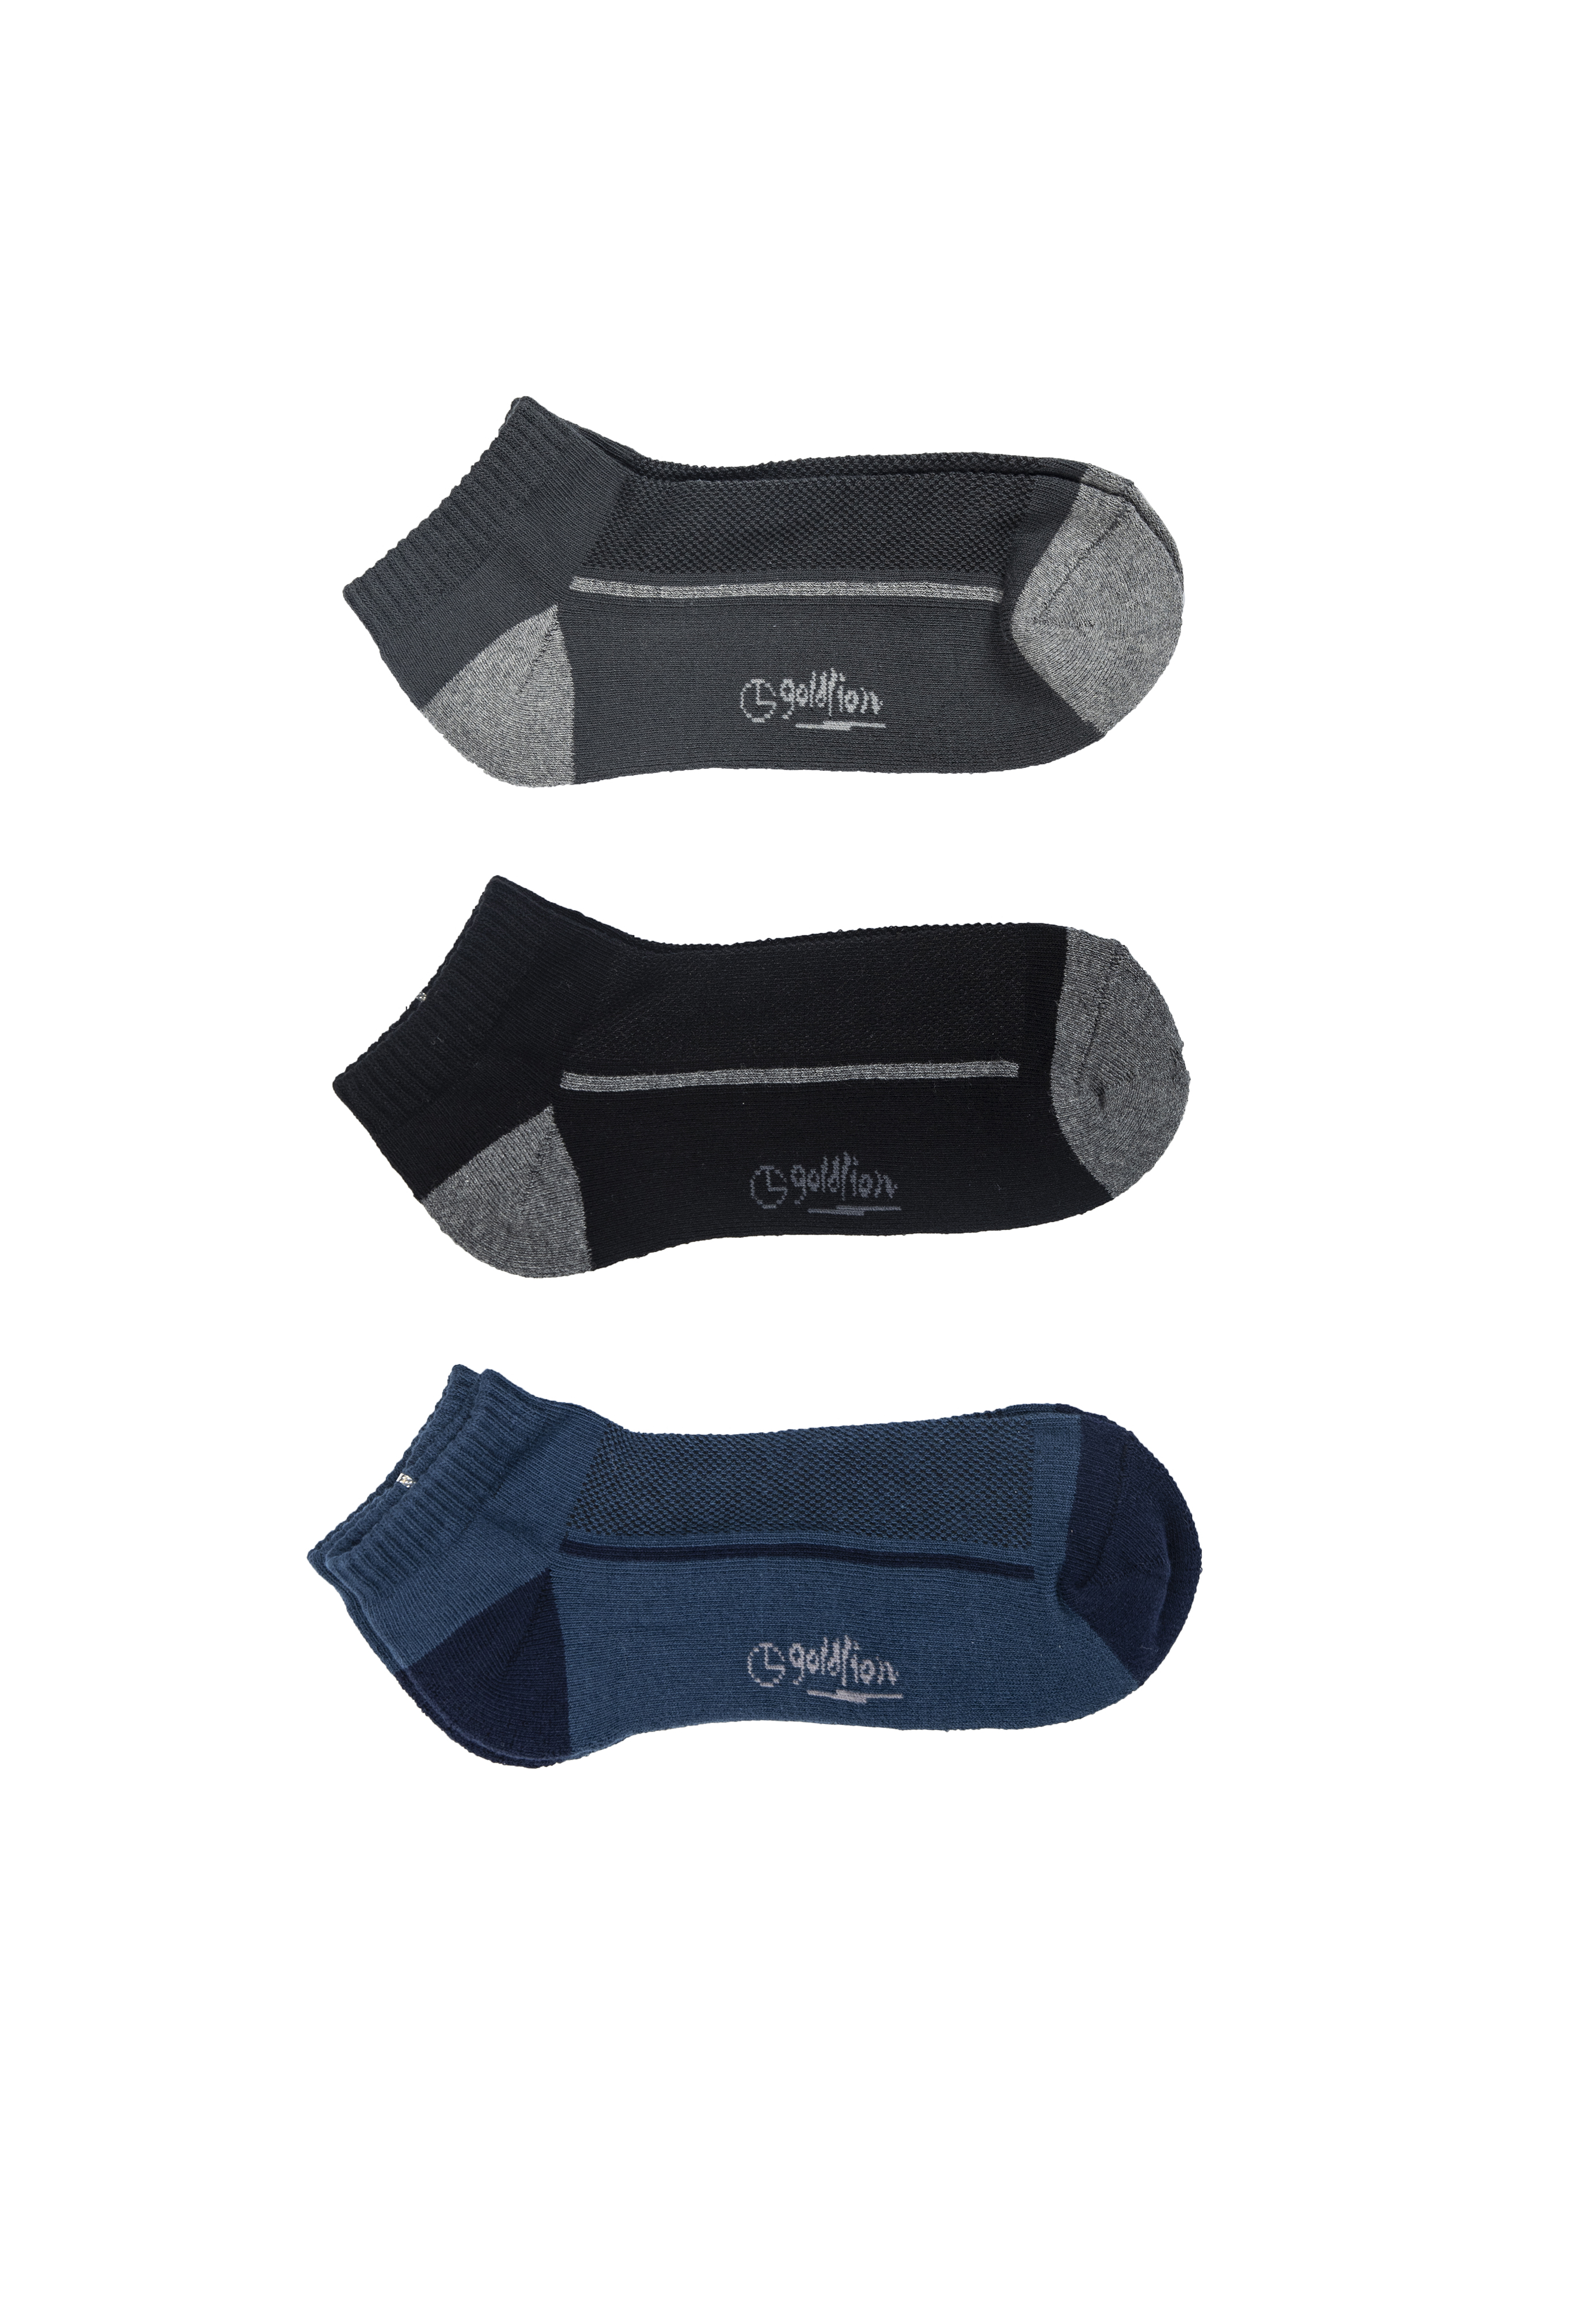 Goldlion Cotton Spandex Sport Ankle Socks (3-piece pack)